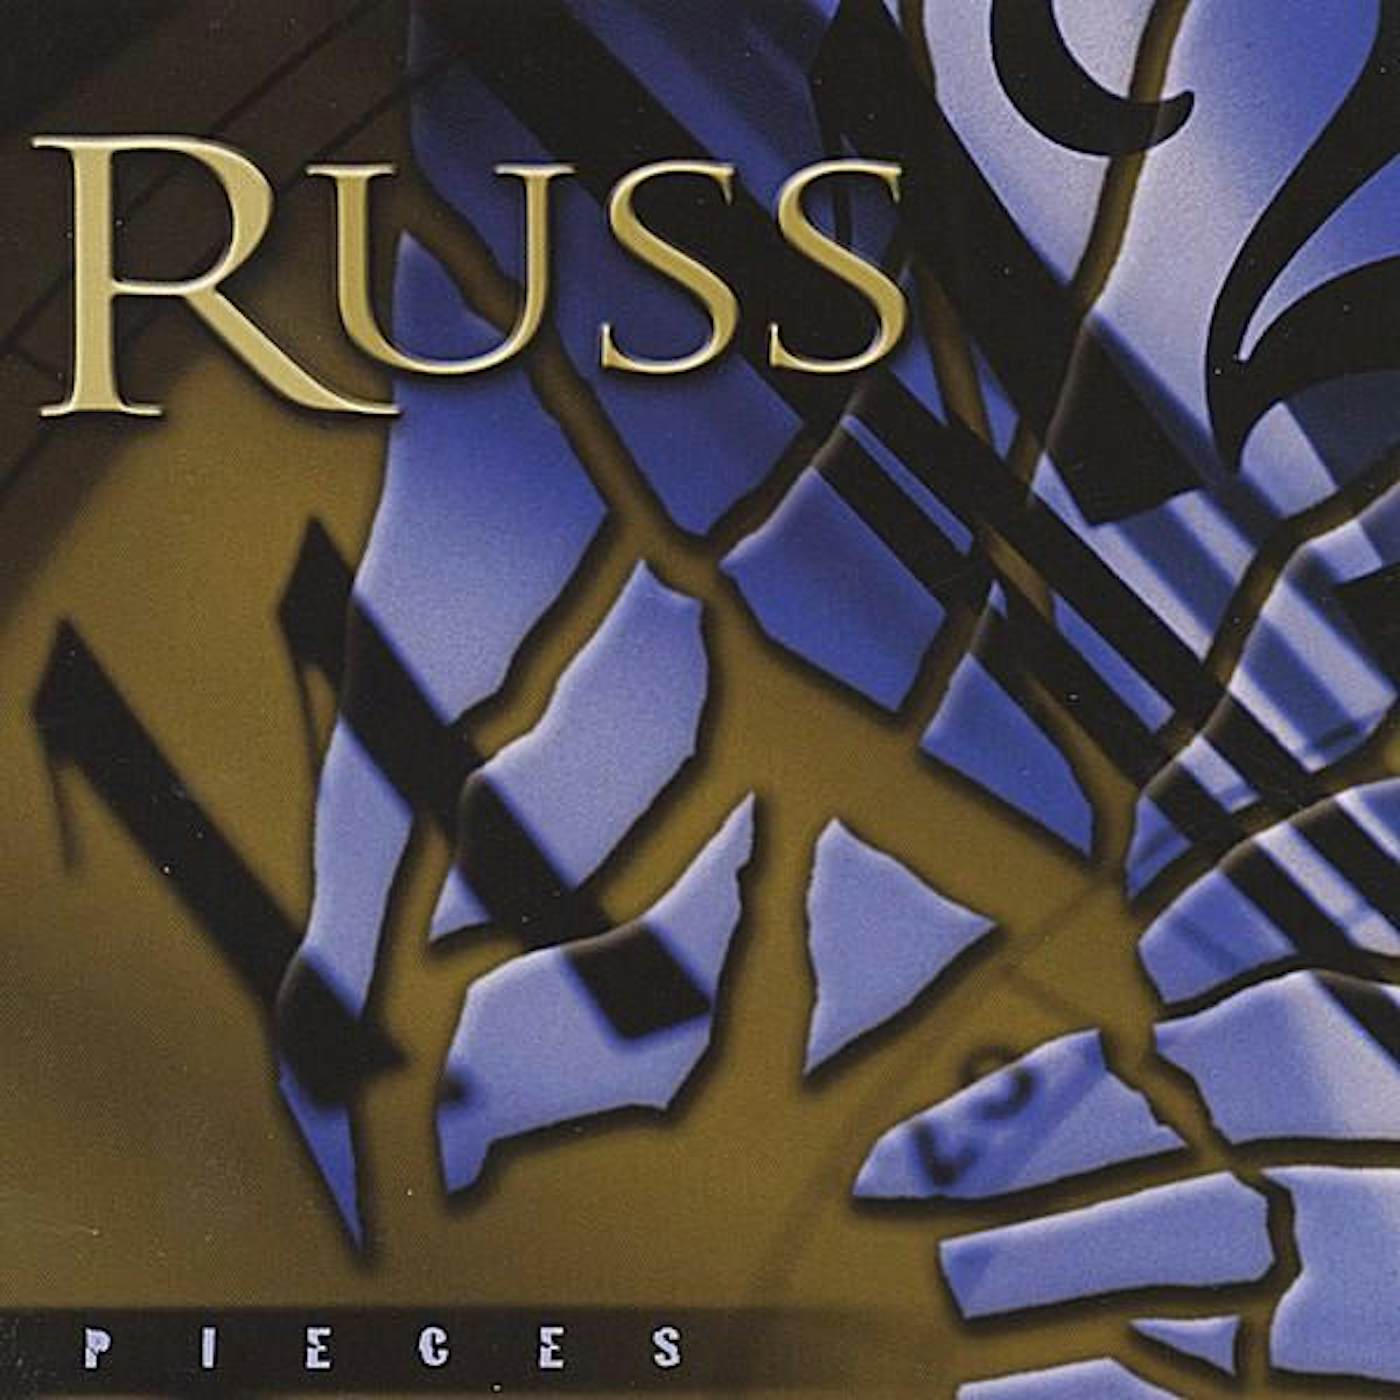 Russ Bonagura PIECES CD